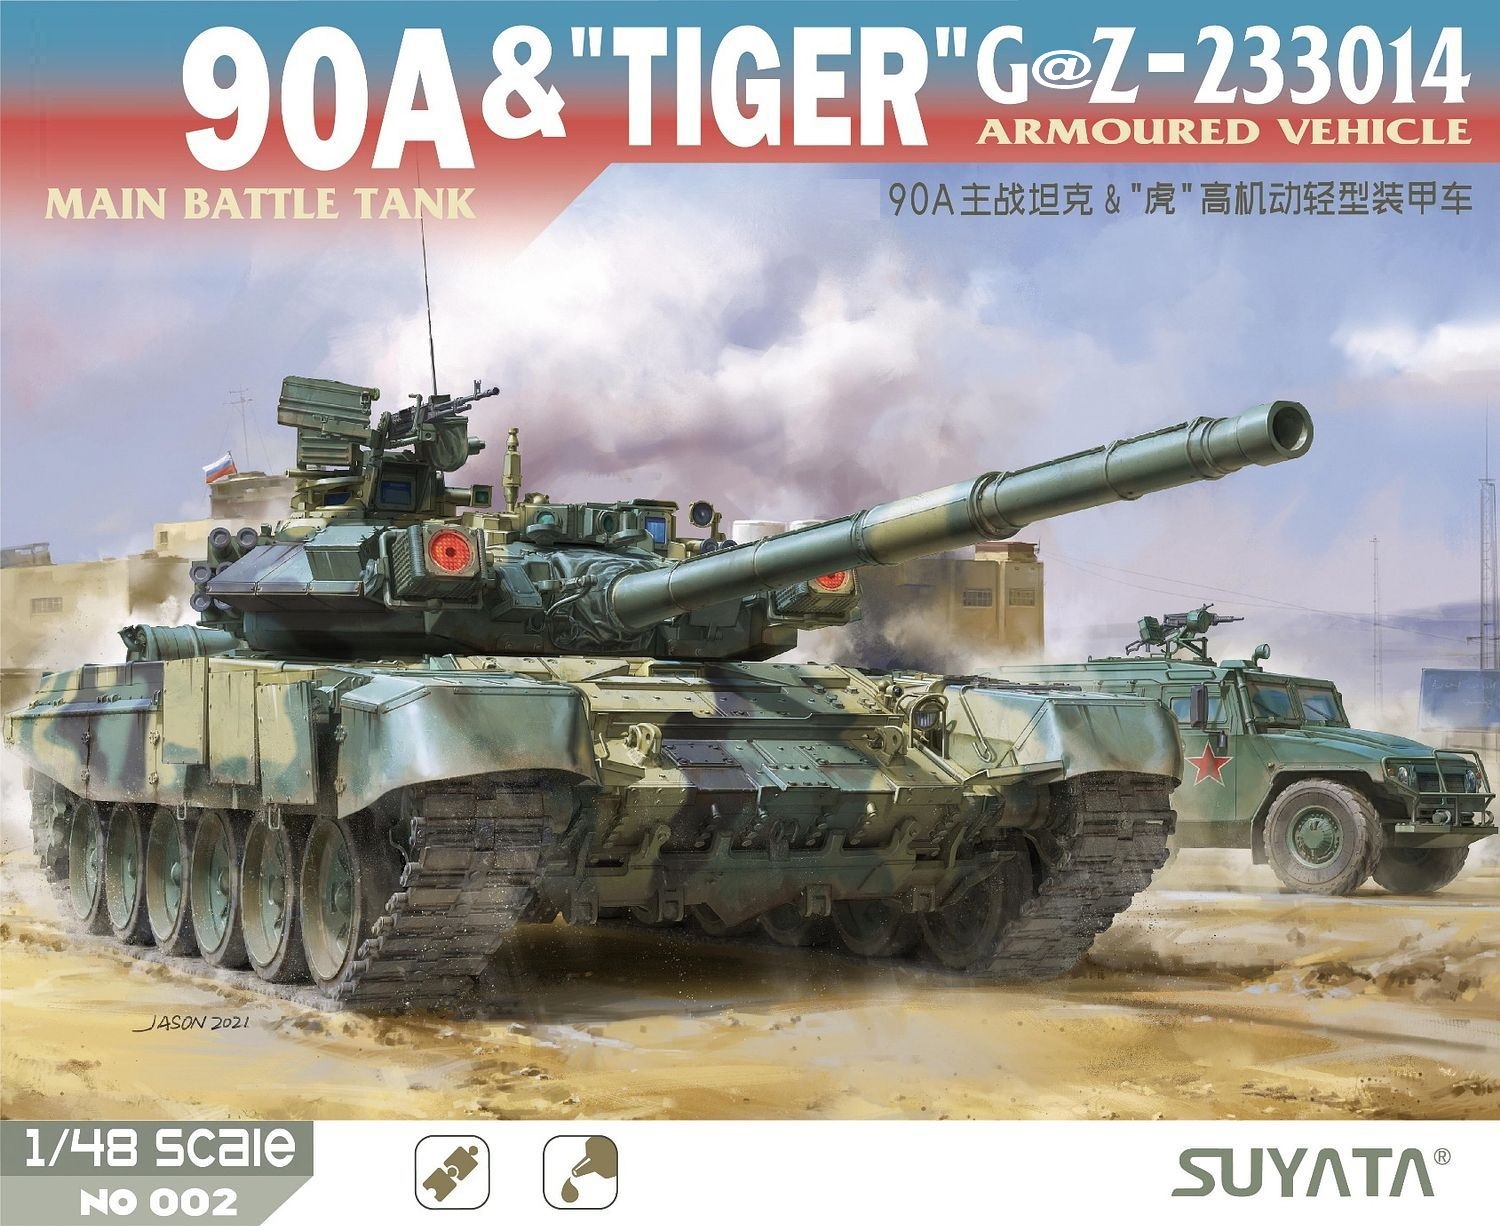 NO002  техника и вооружение  Танк-90А MBT & "Tiger" Г@З-233014 2in1 set  (1:48)